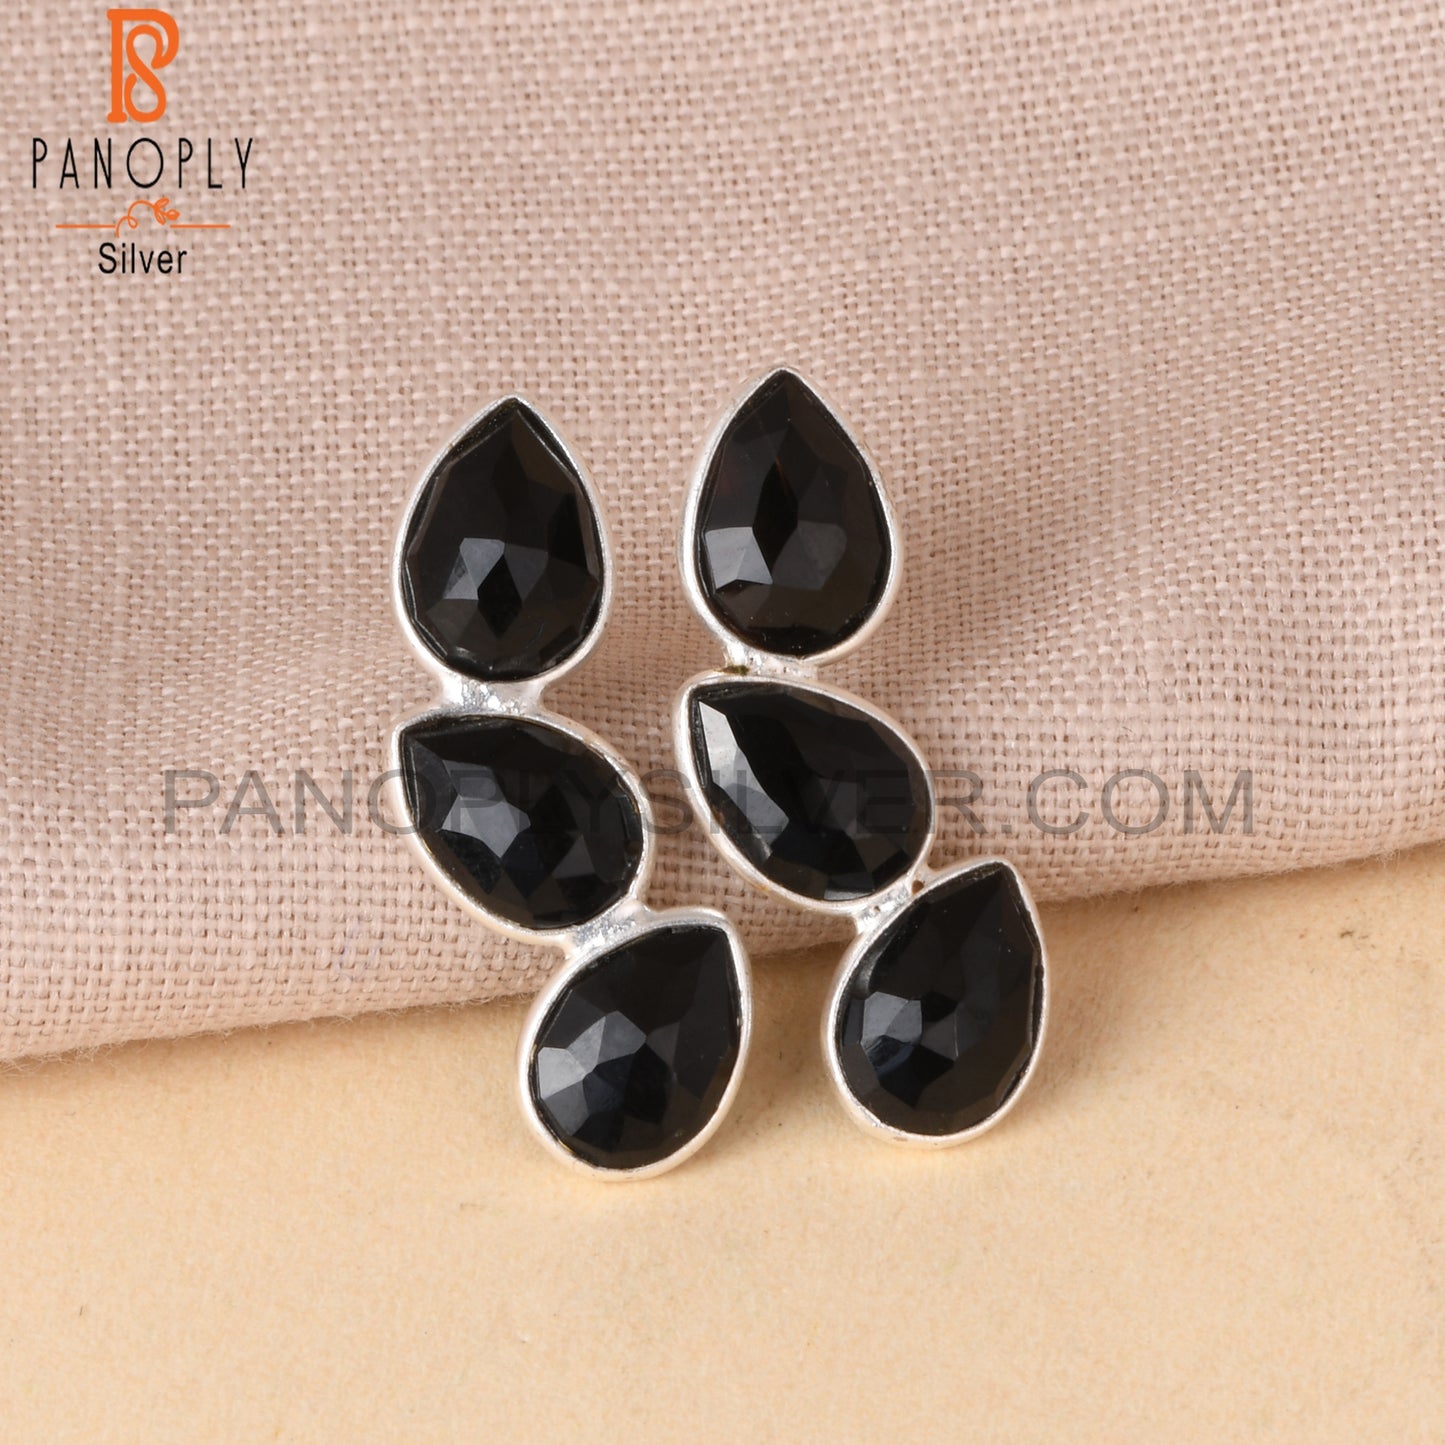 Cenuine Black Onyx Briolette Cut 3 Stone Earrings